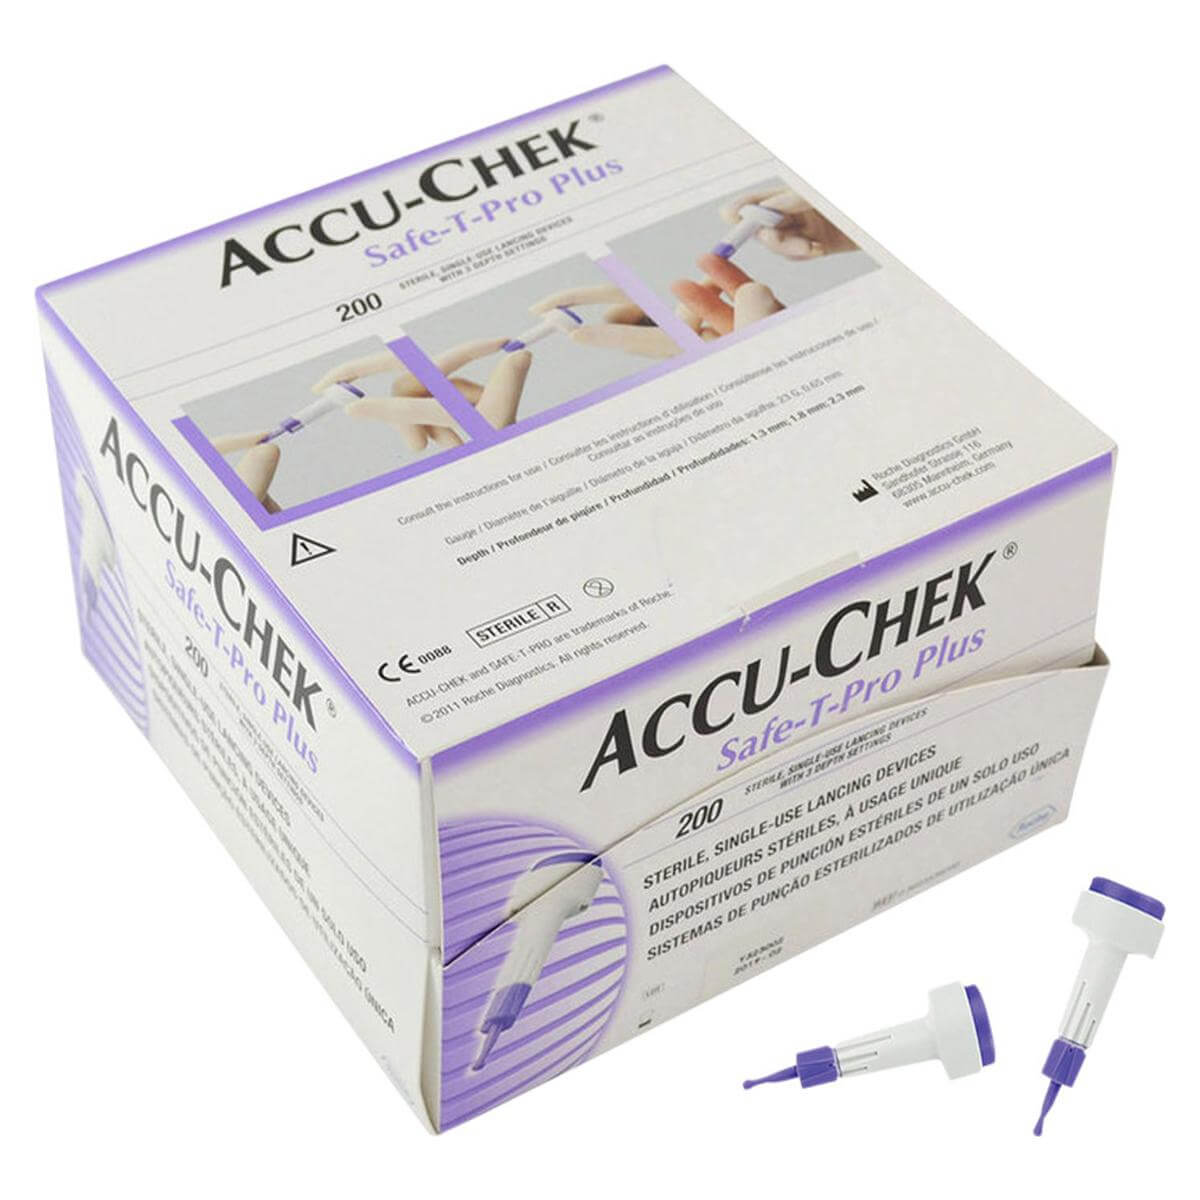 AccuChek Safe-T-Pro per 200 stuks